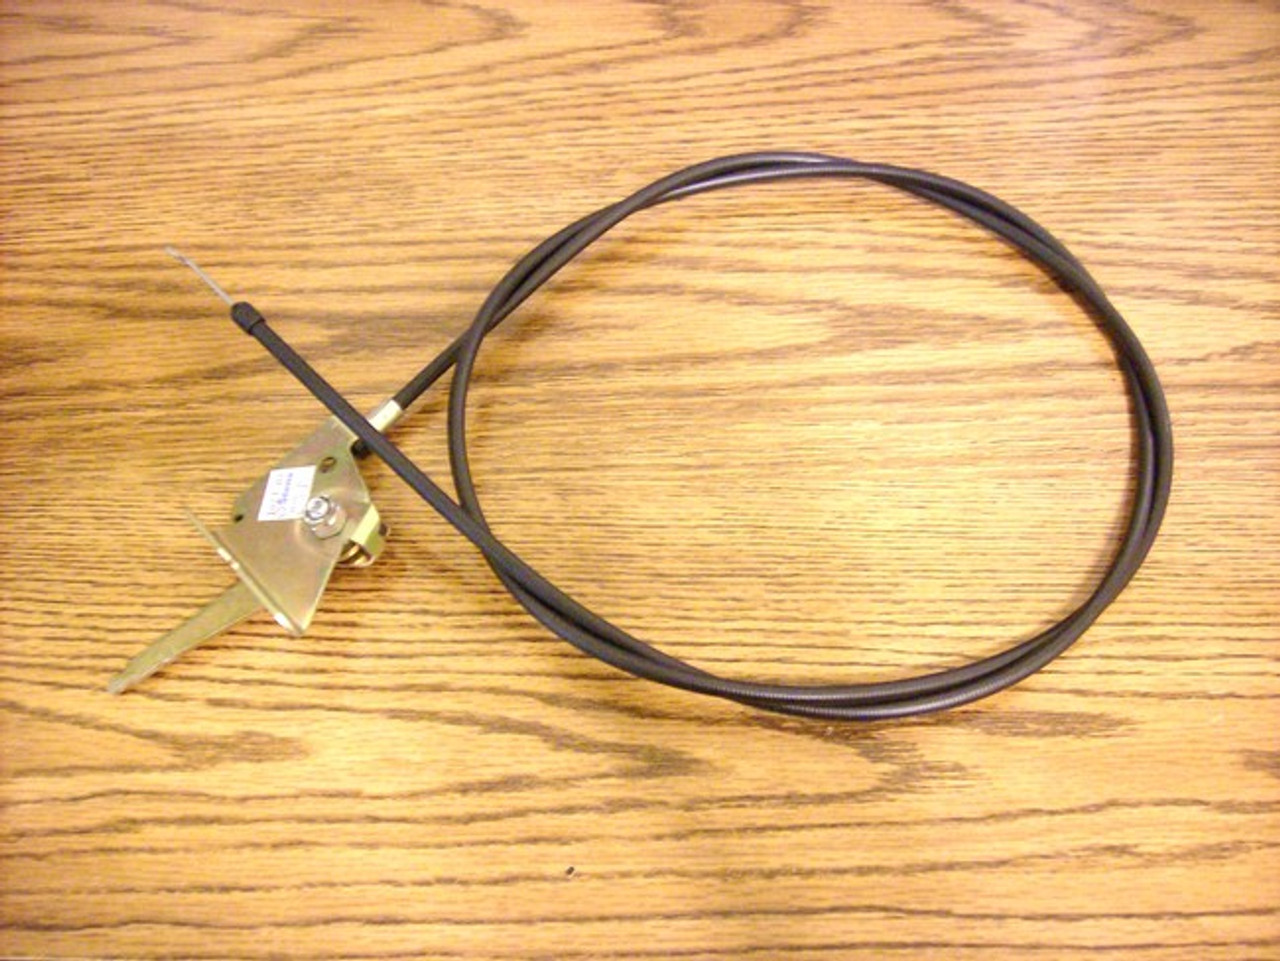 Throttle Cable for Exmark Lazer Z, Turf Ranger, Turf Tracer 1543697, 1633696, 633696, 1-543697, 1-633696